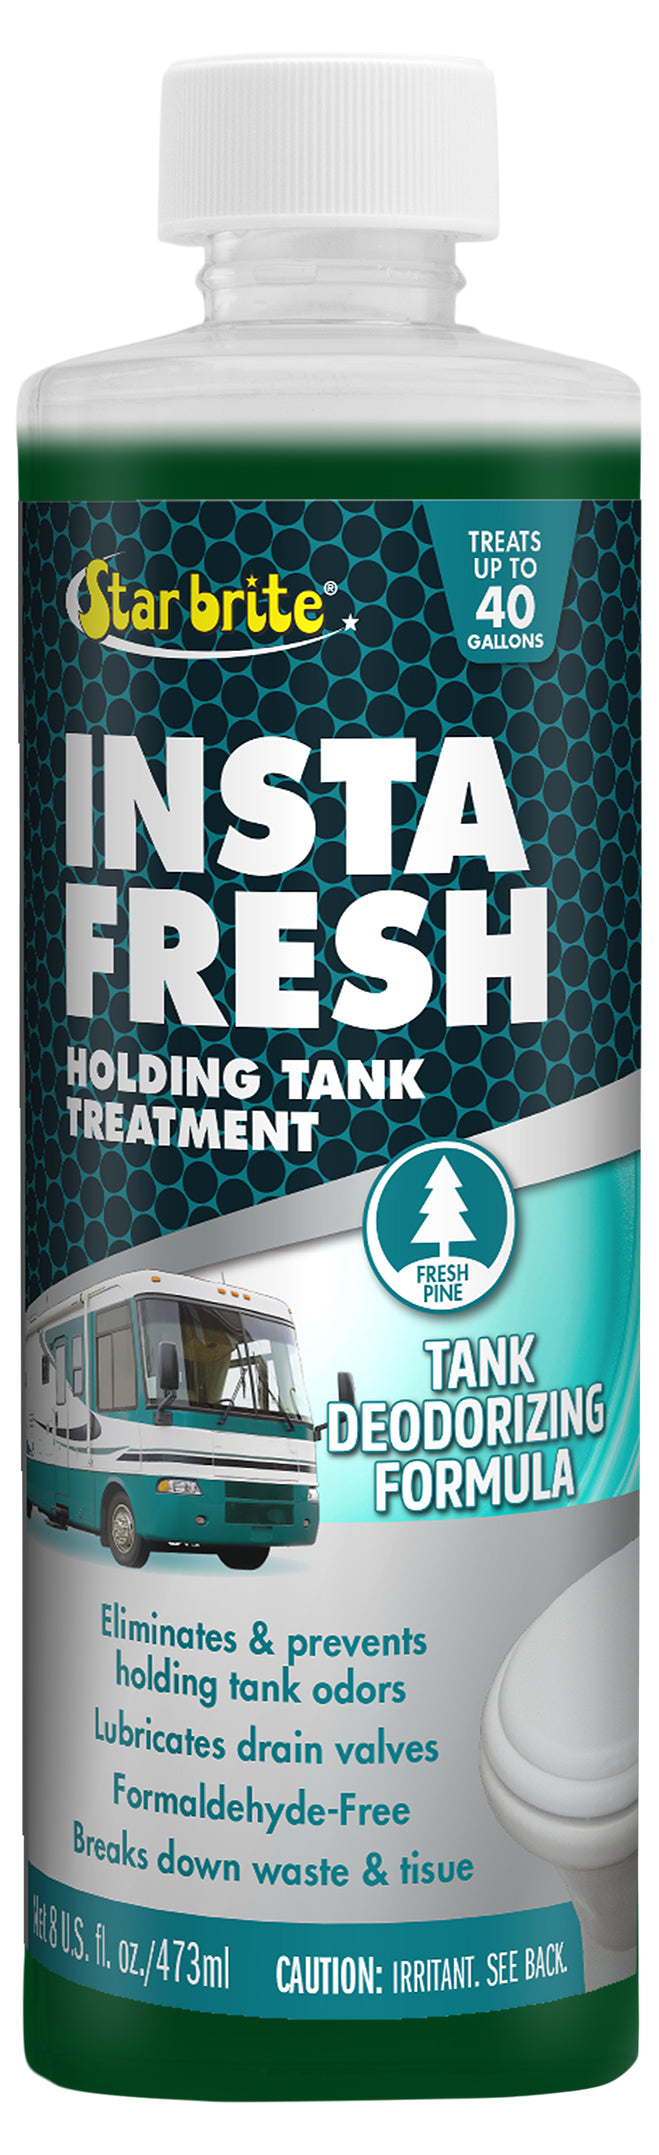 Star brite 72832 Instafresh Holding Tank Treatment - 32 oz., Fresh Pine Scent